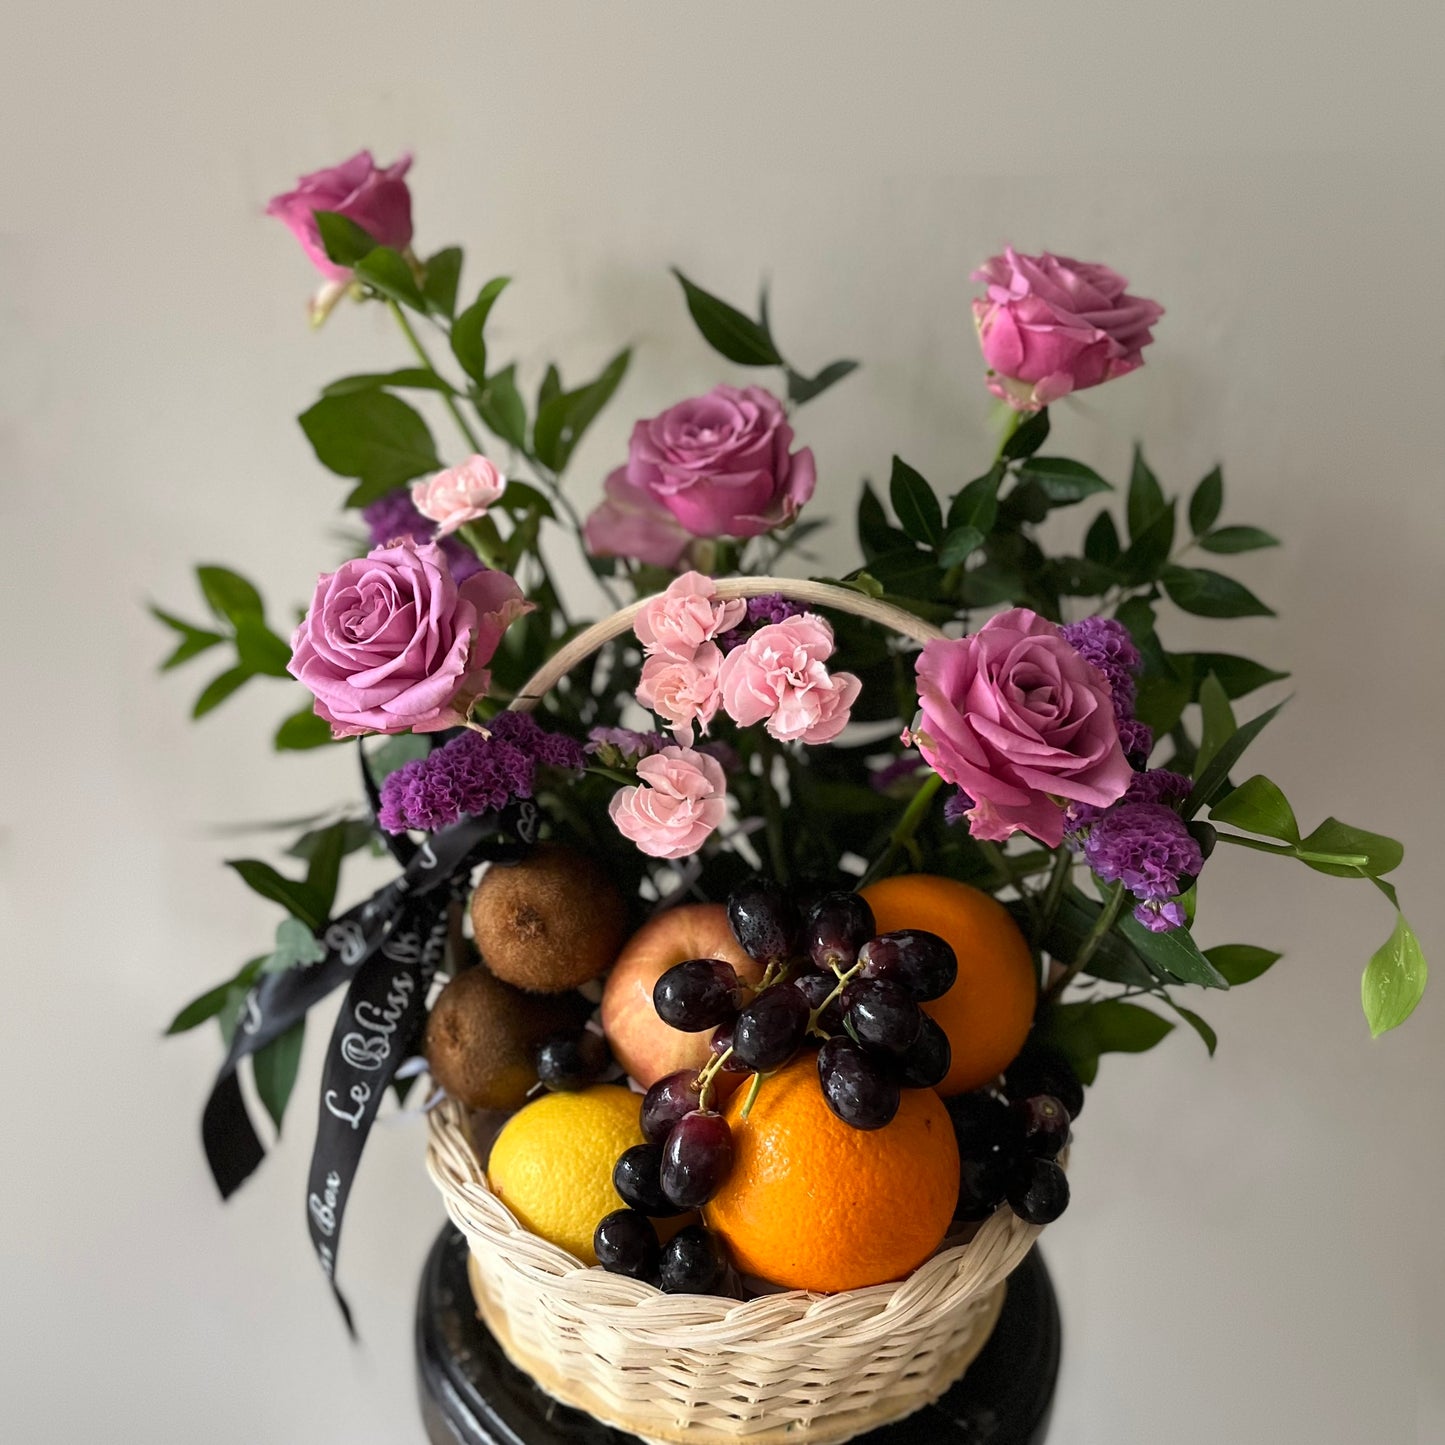 Blooming Small Fruit Basket